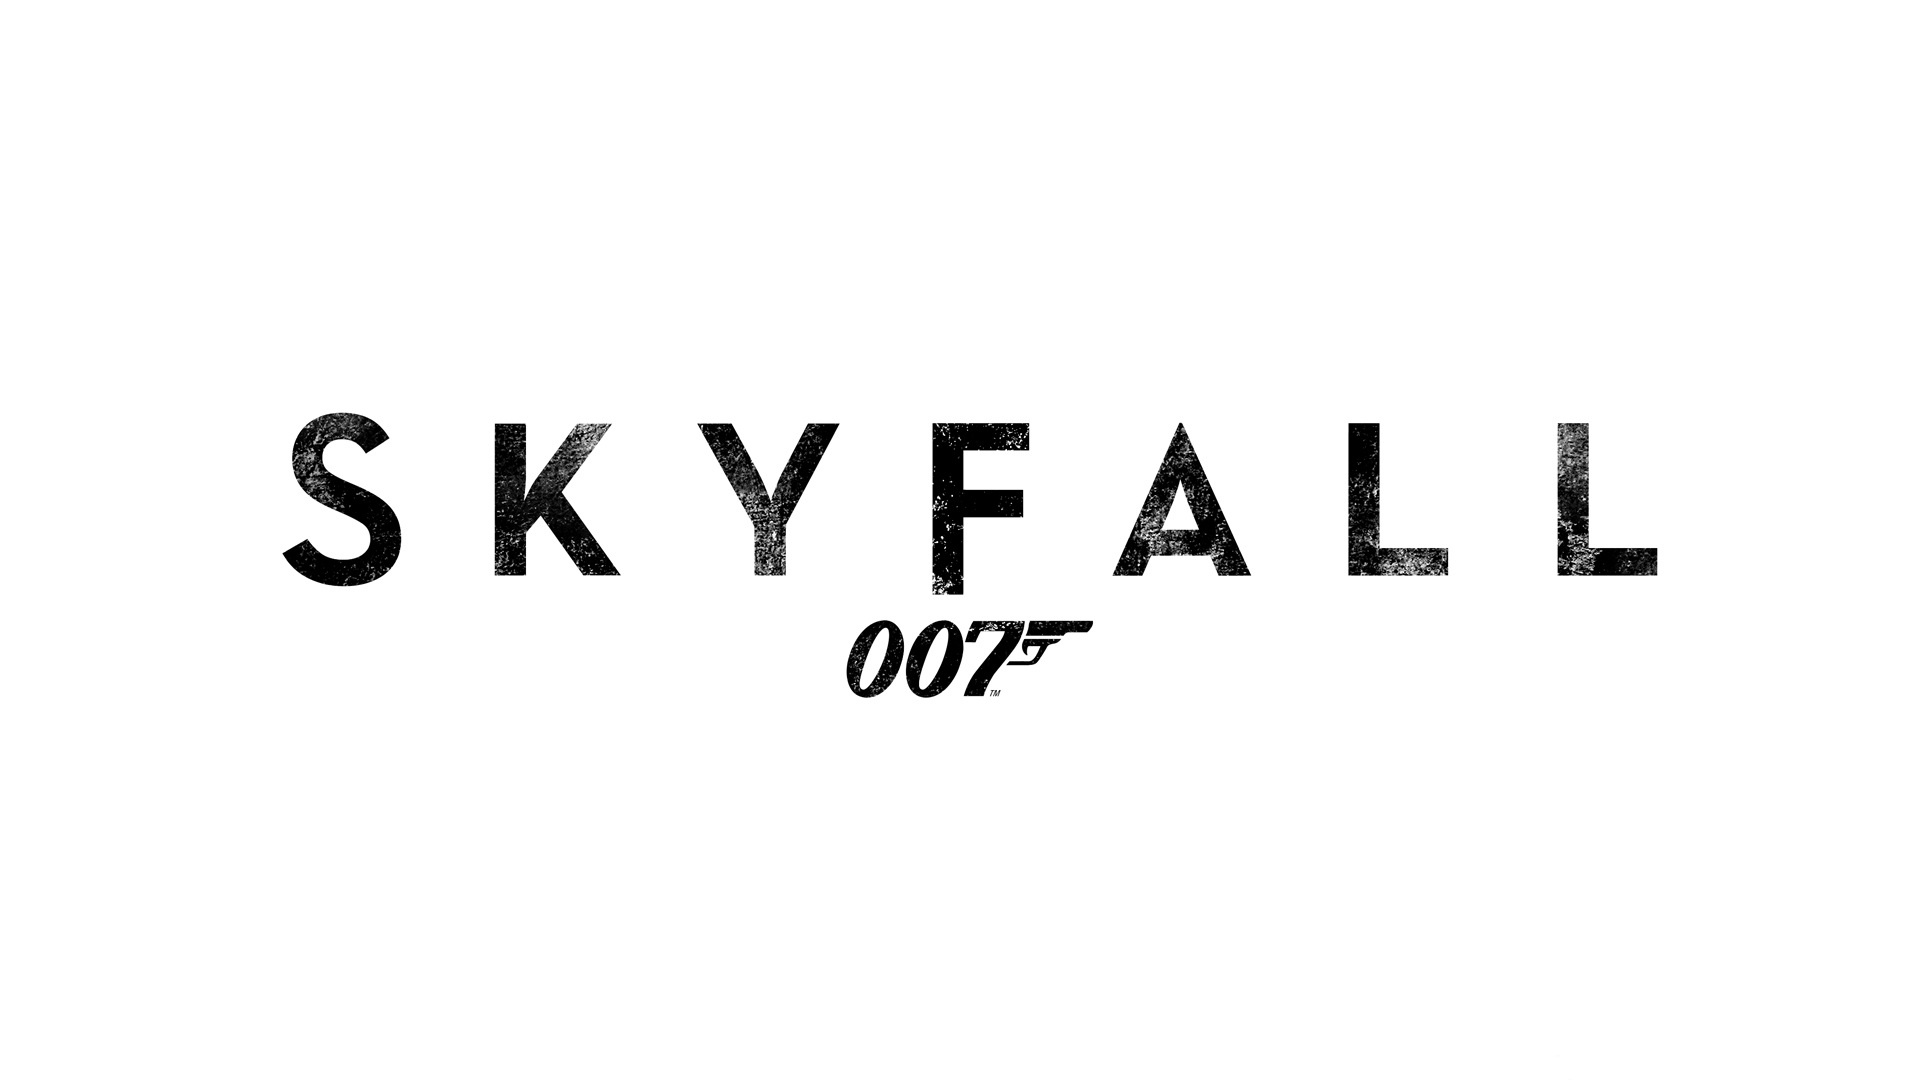 Skyfall: James Bond 007, The 23rd adventure in the longest-running film franchise of all time. 1920x1080 Full HD Wallpaper.